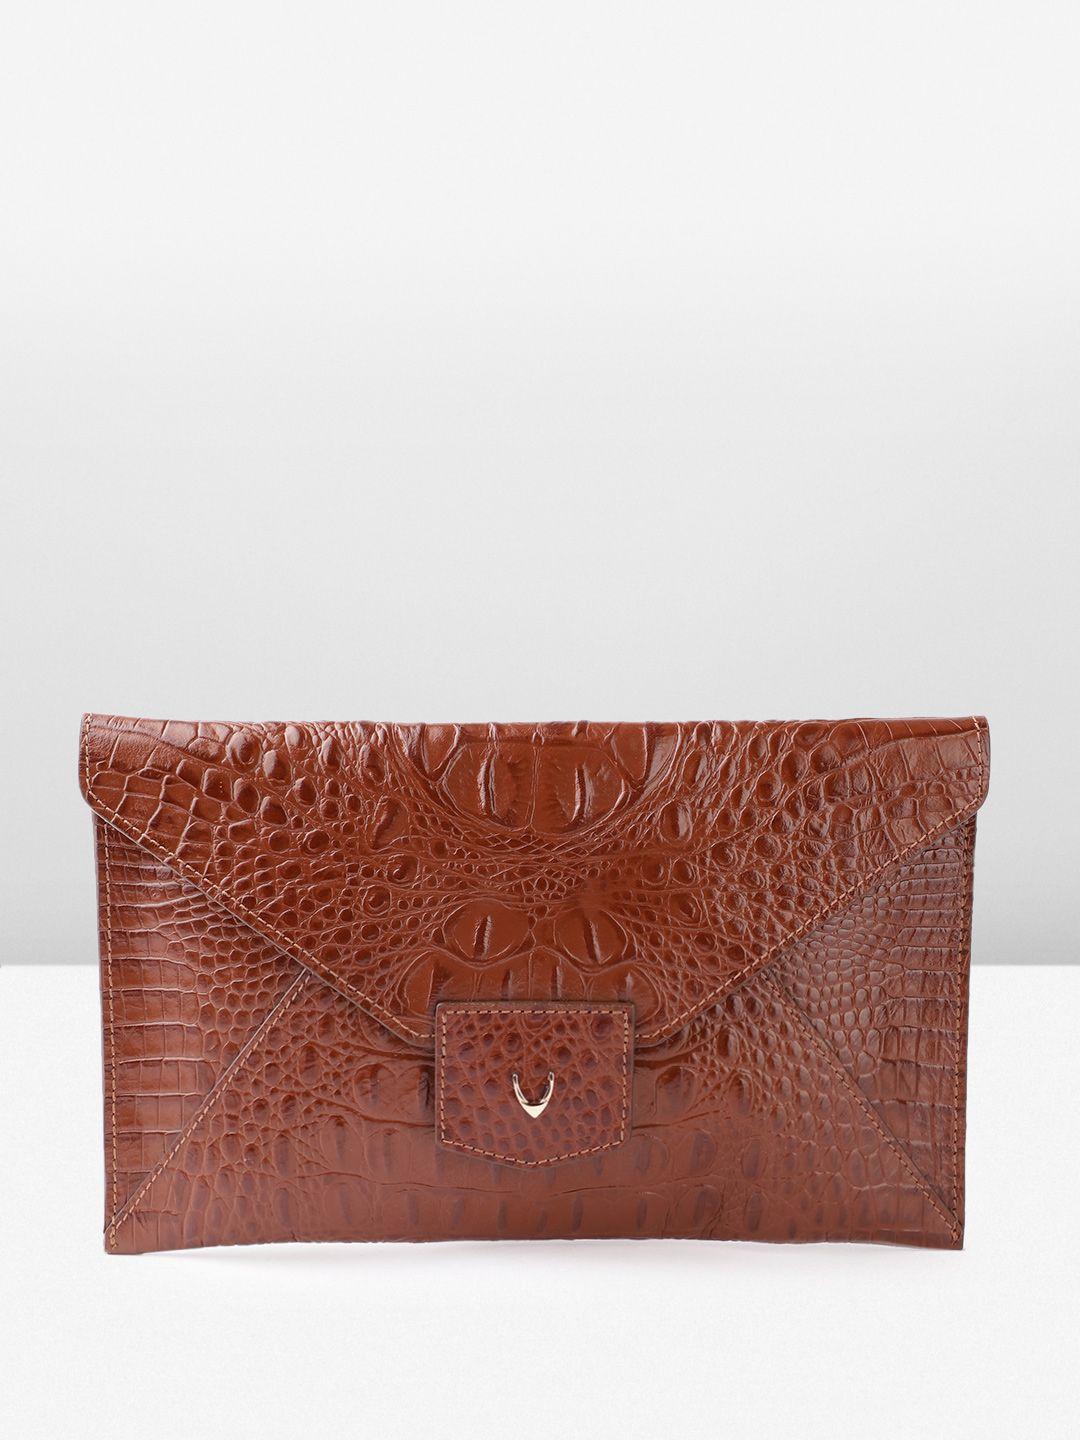 hidesign croc textured envelope leather clutch